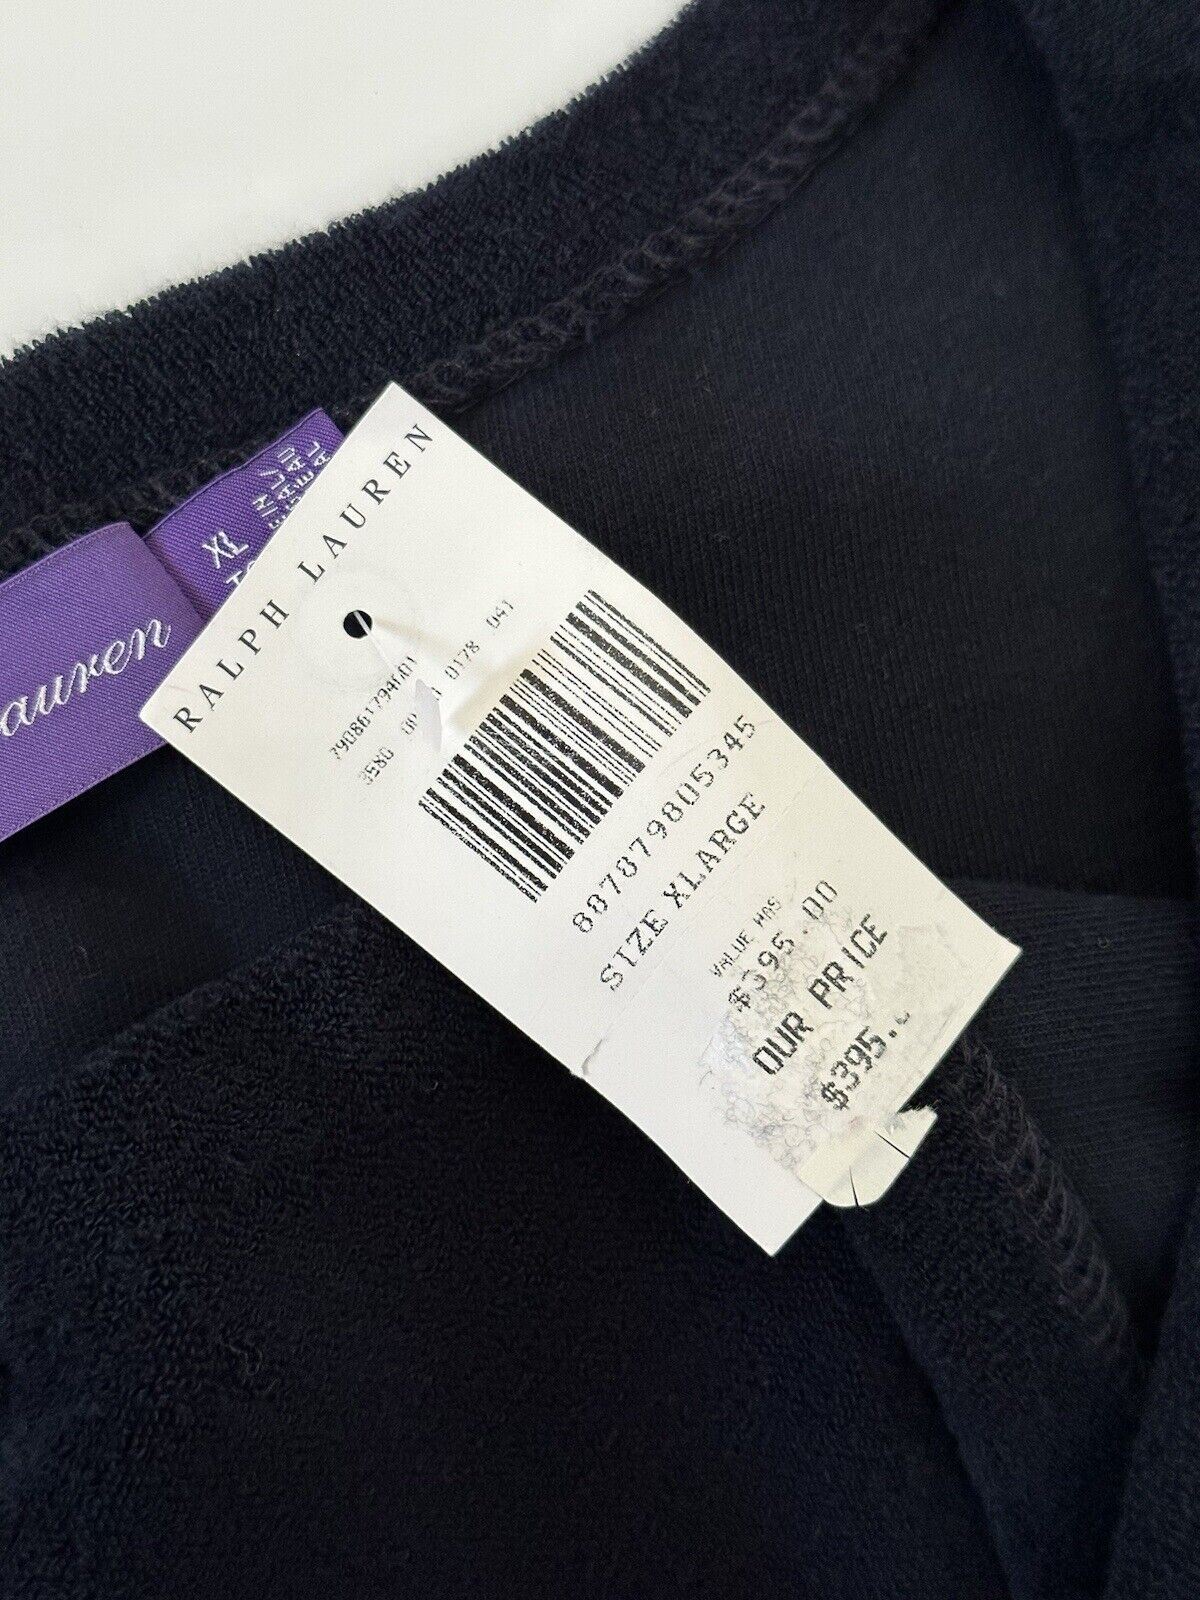 NWT $395 Ralph Lauren Purple Label Cotton Blue Striped Sweater XL Portugal